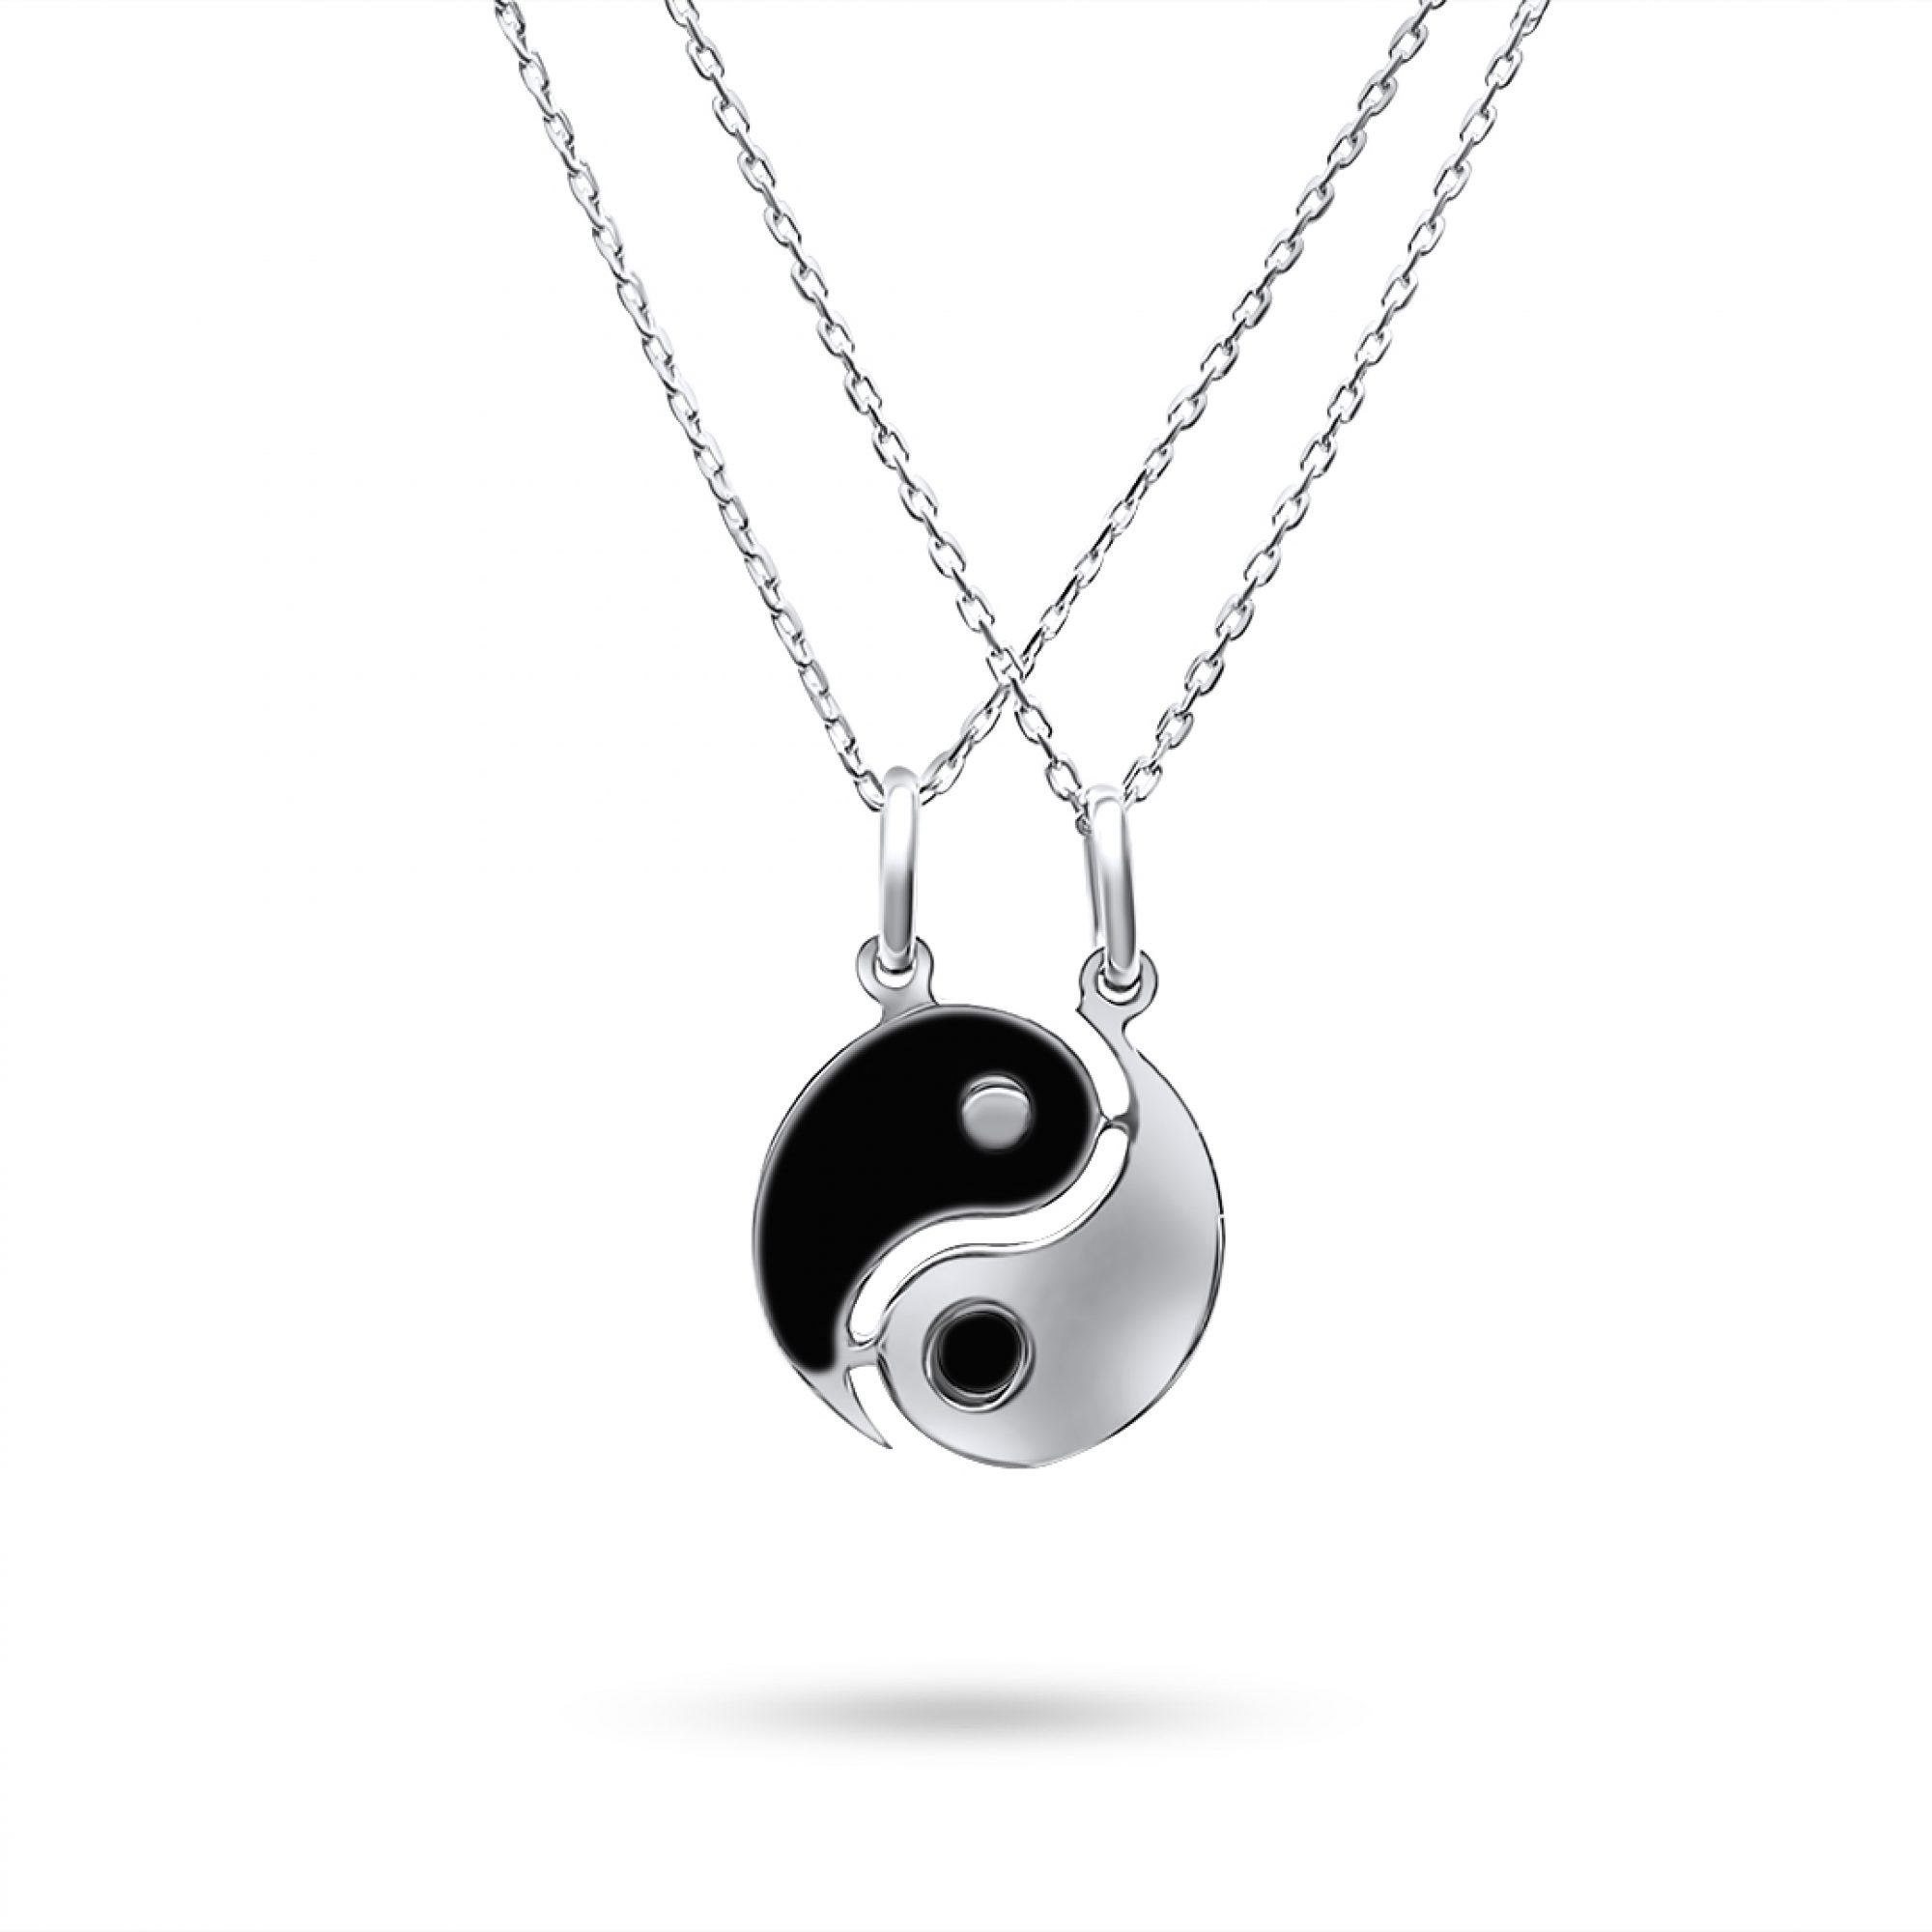 Double yin yiang necklace